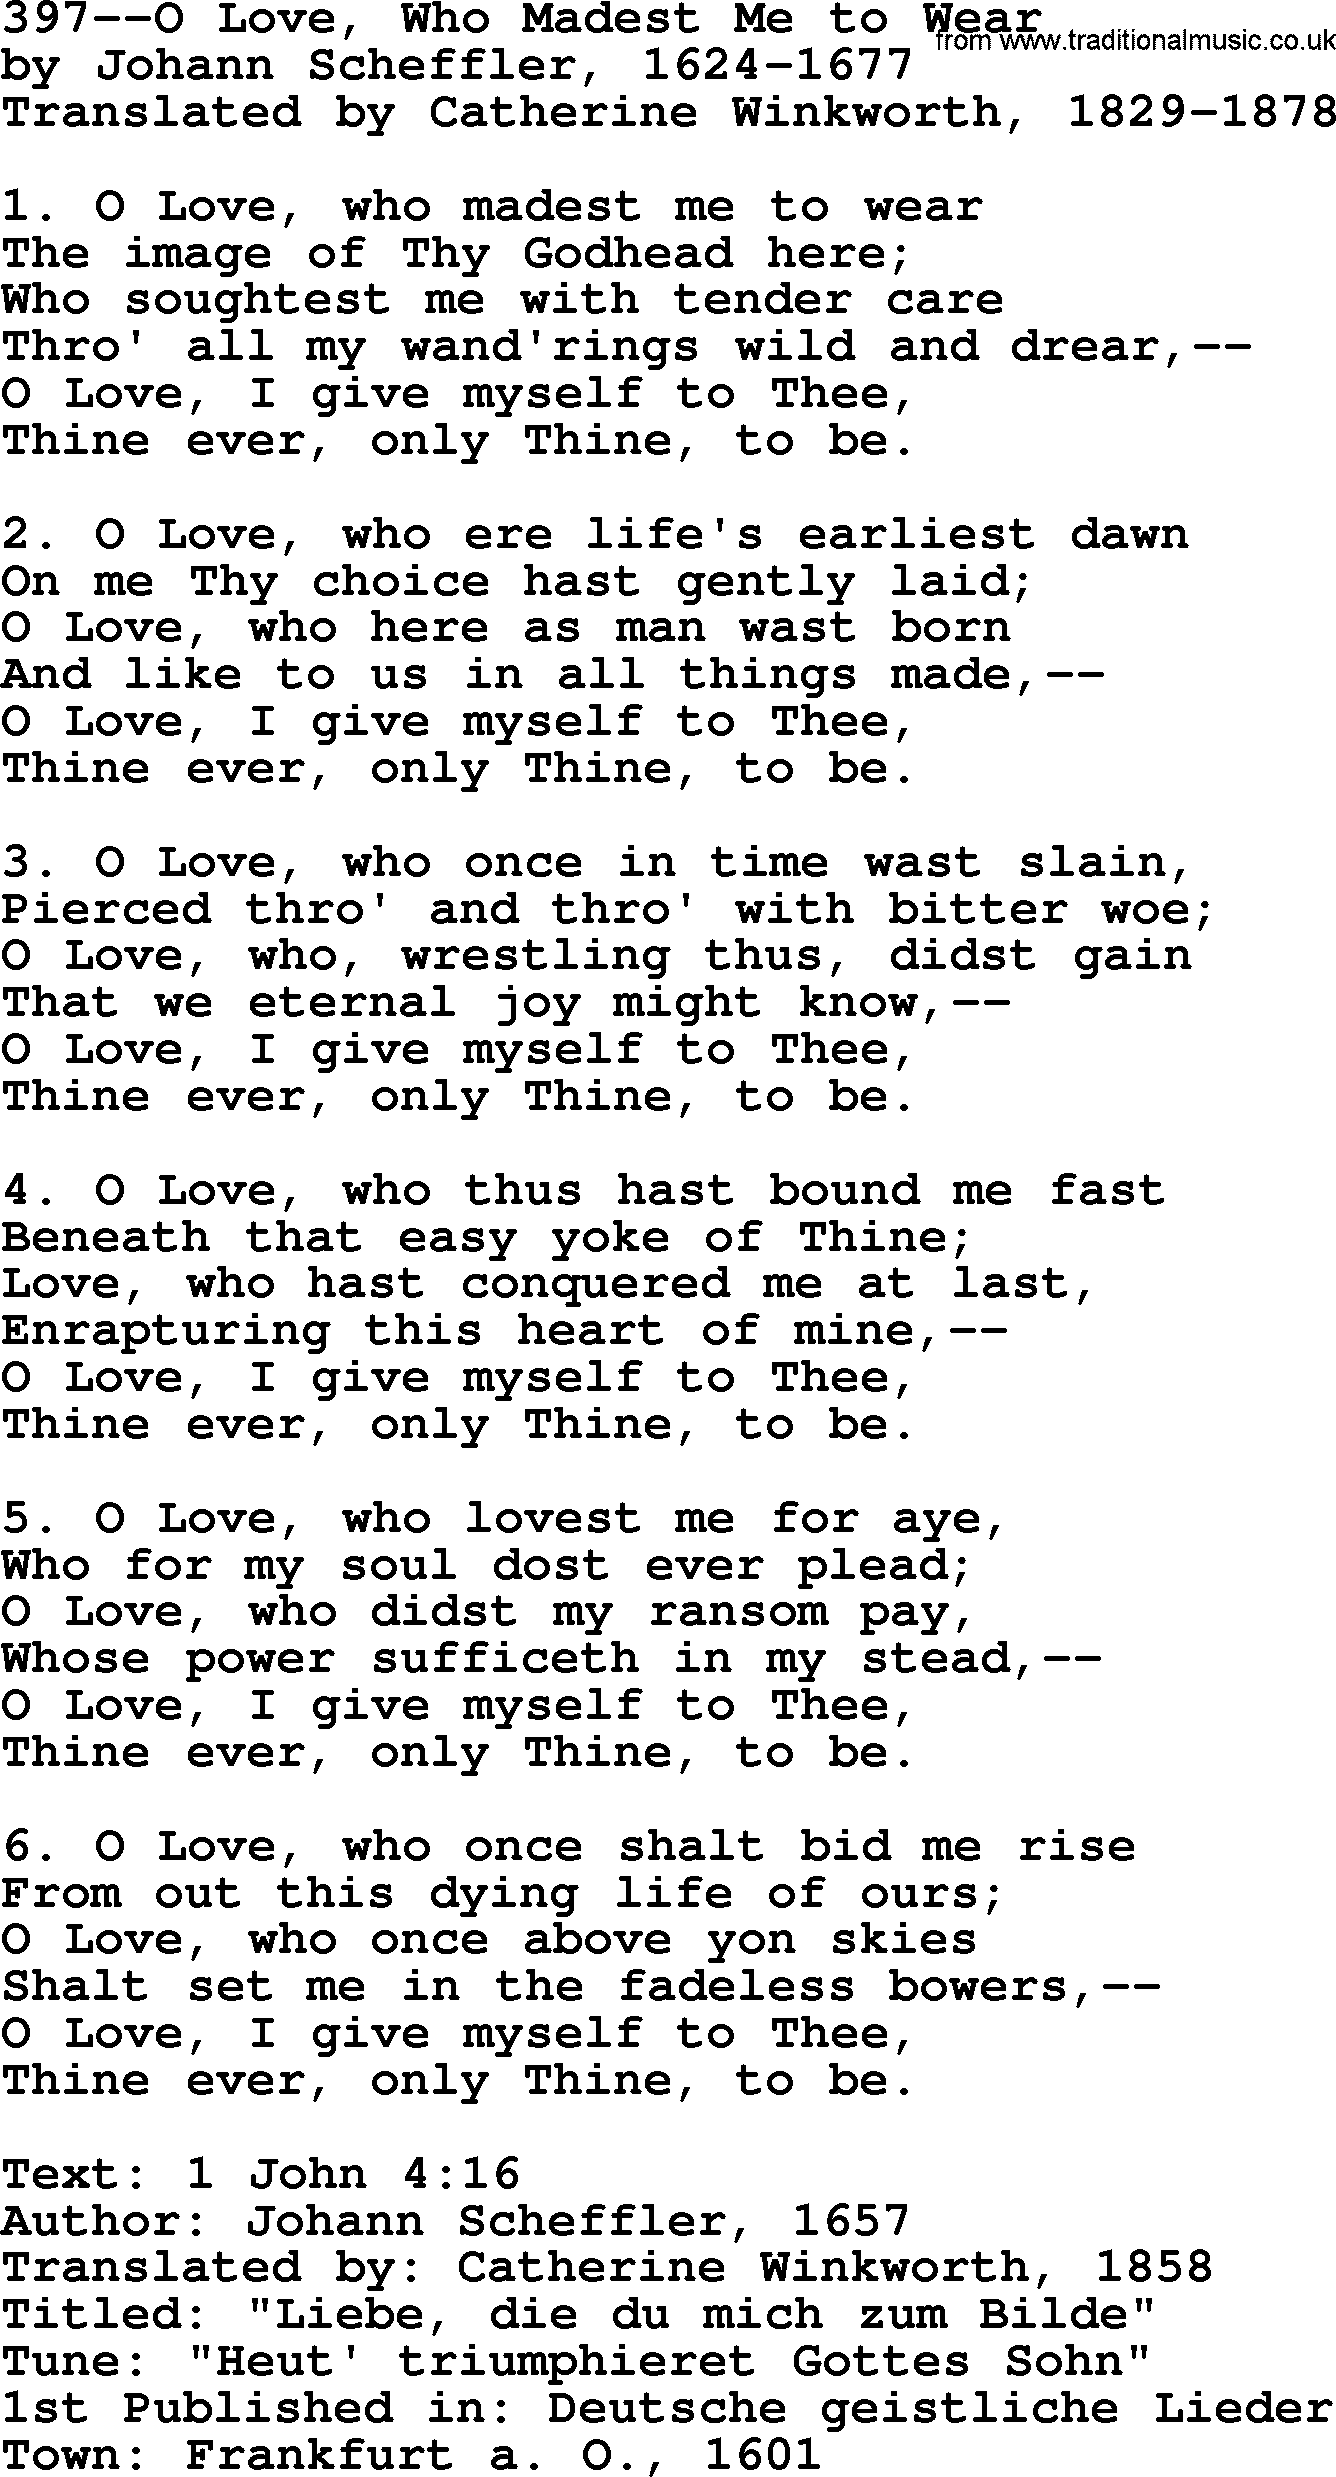 Lutheran Hymn: 397--O Love, Who Madest Me to Wear.txt lyrics with PDF